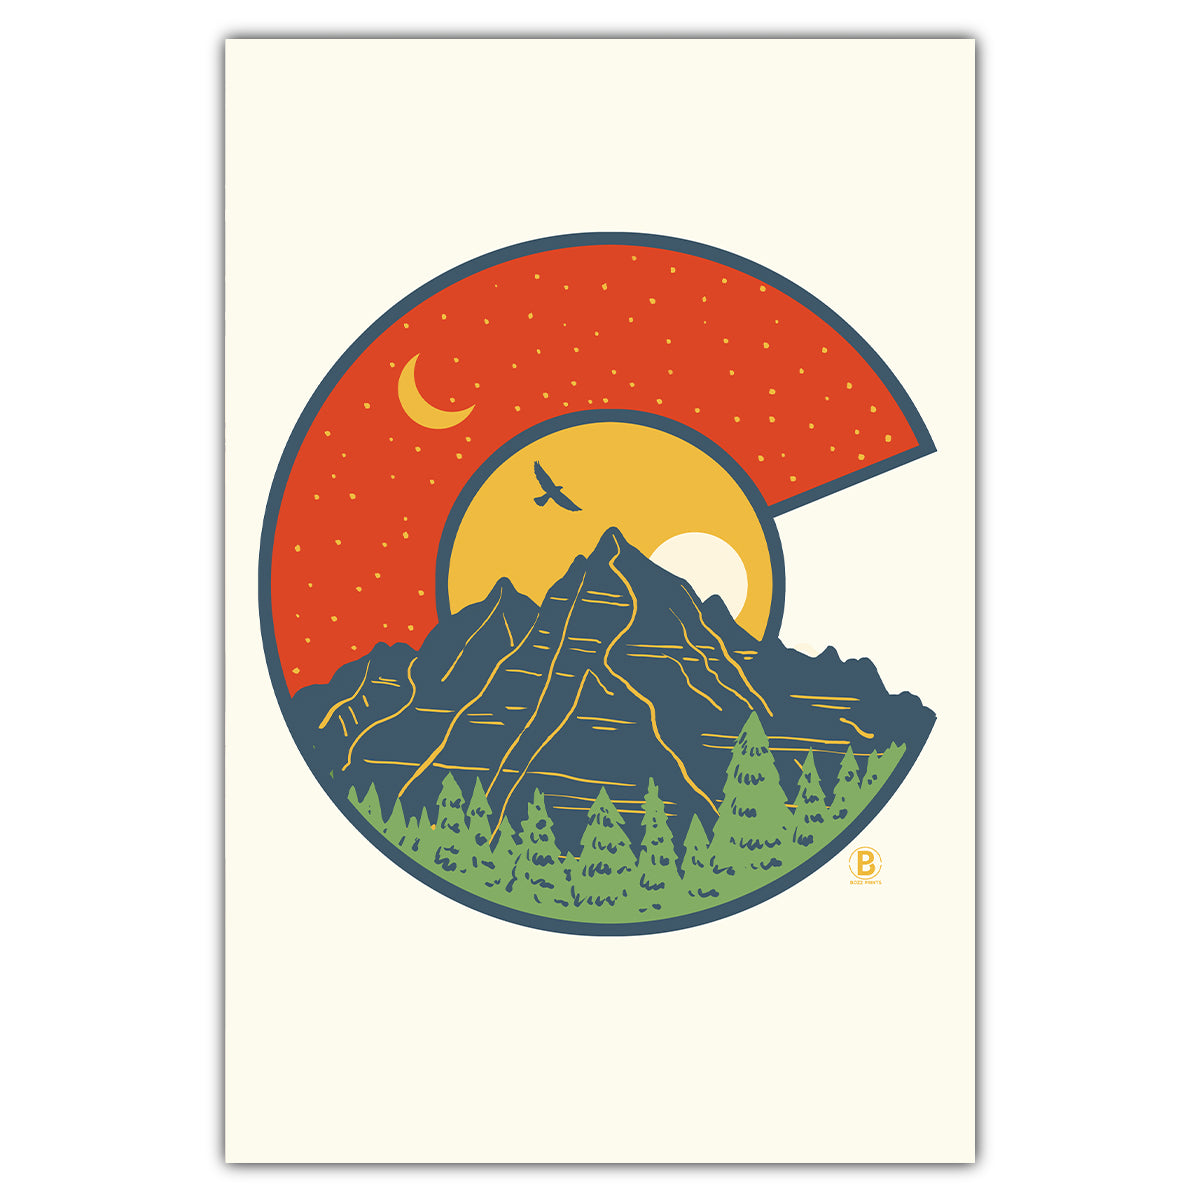 Layers of Colorado "C" Postcard - Bozz Prints